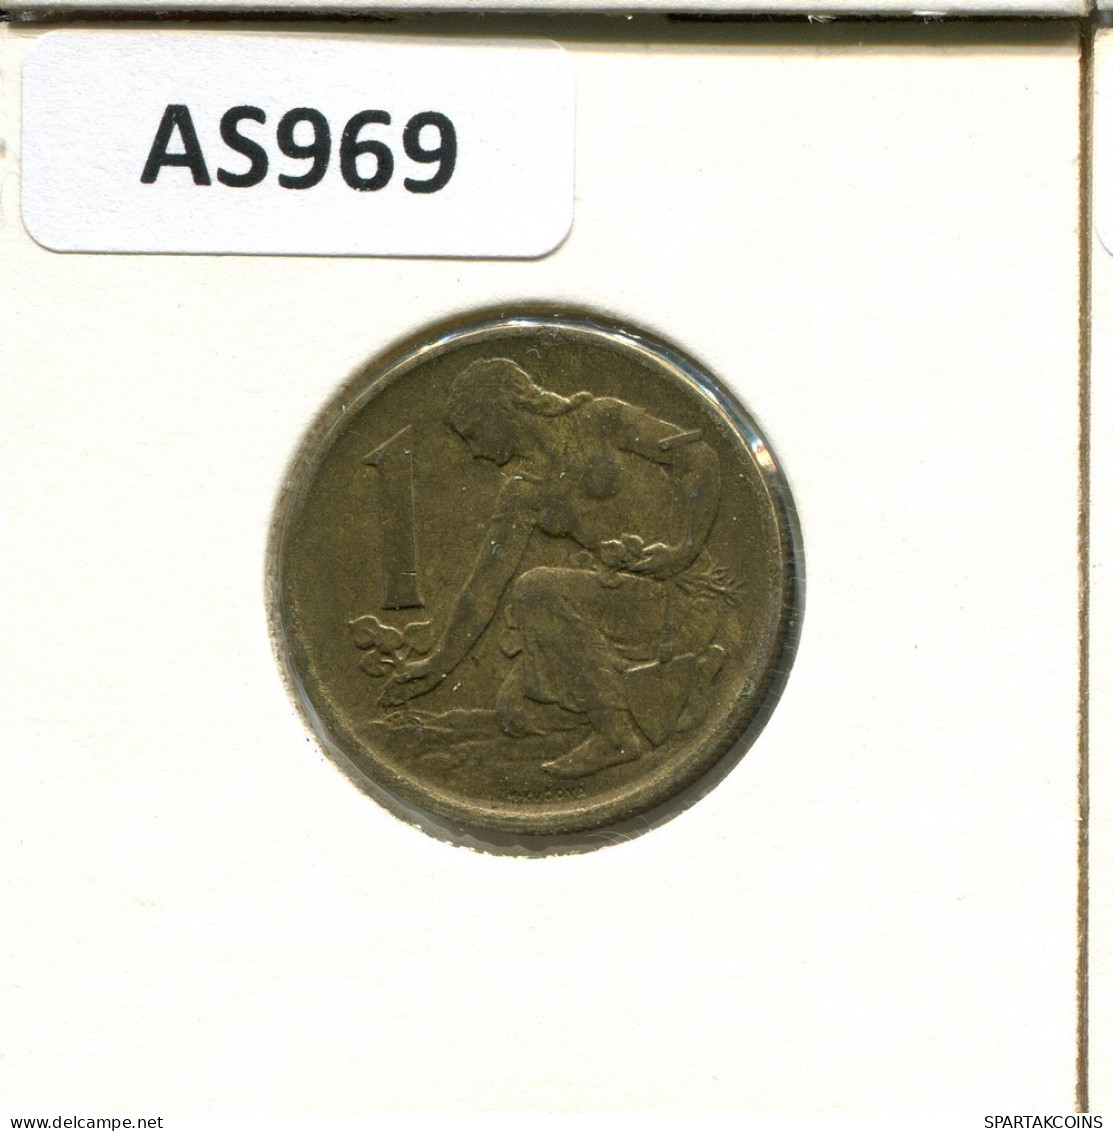 1 KORUNA 1981 CZECHOSLOVAKIA Coin #AS969.U.A